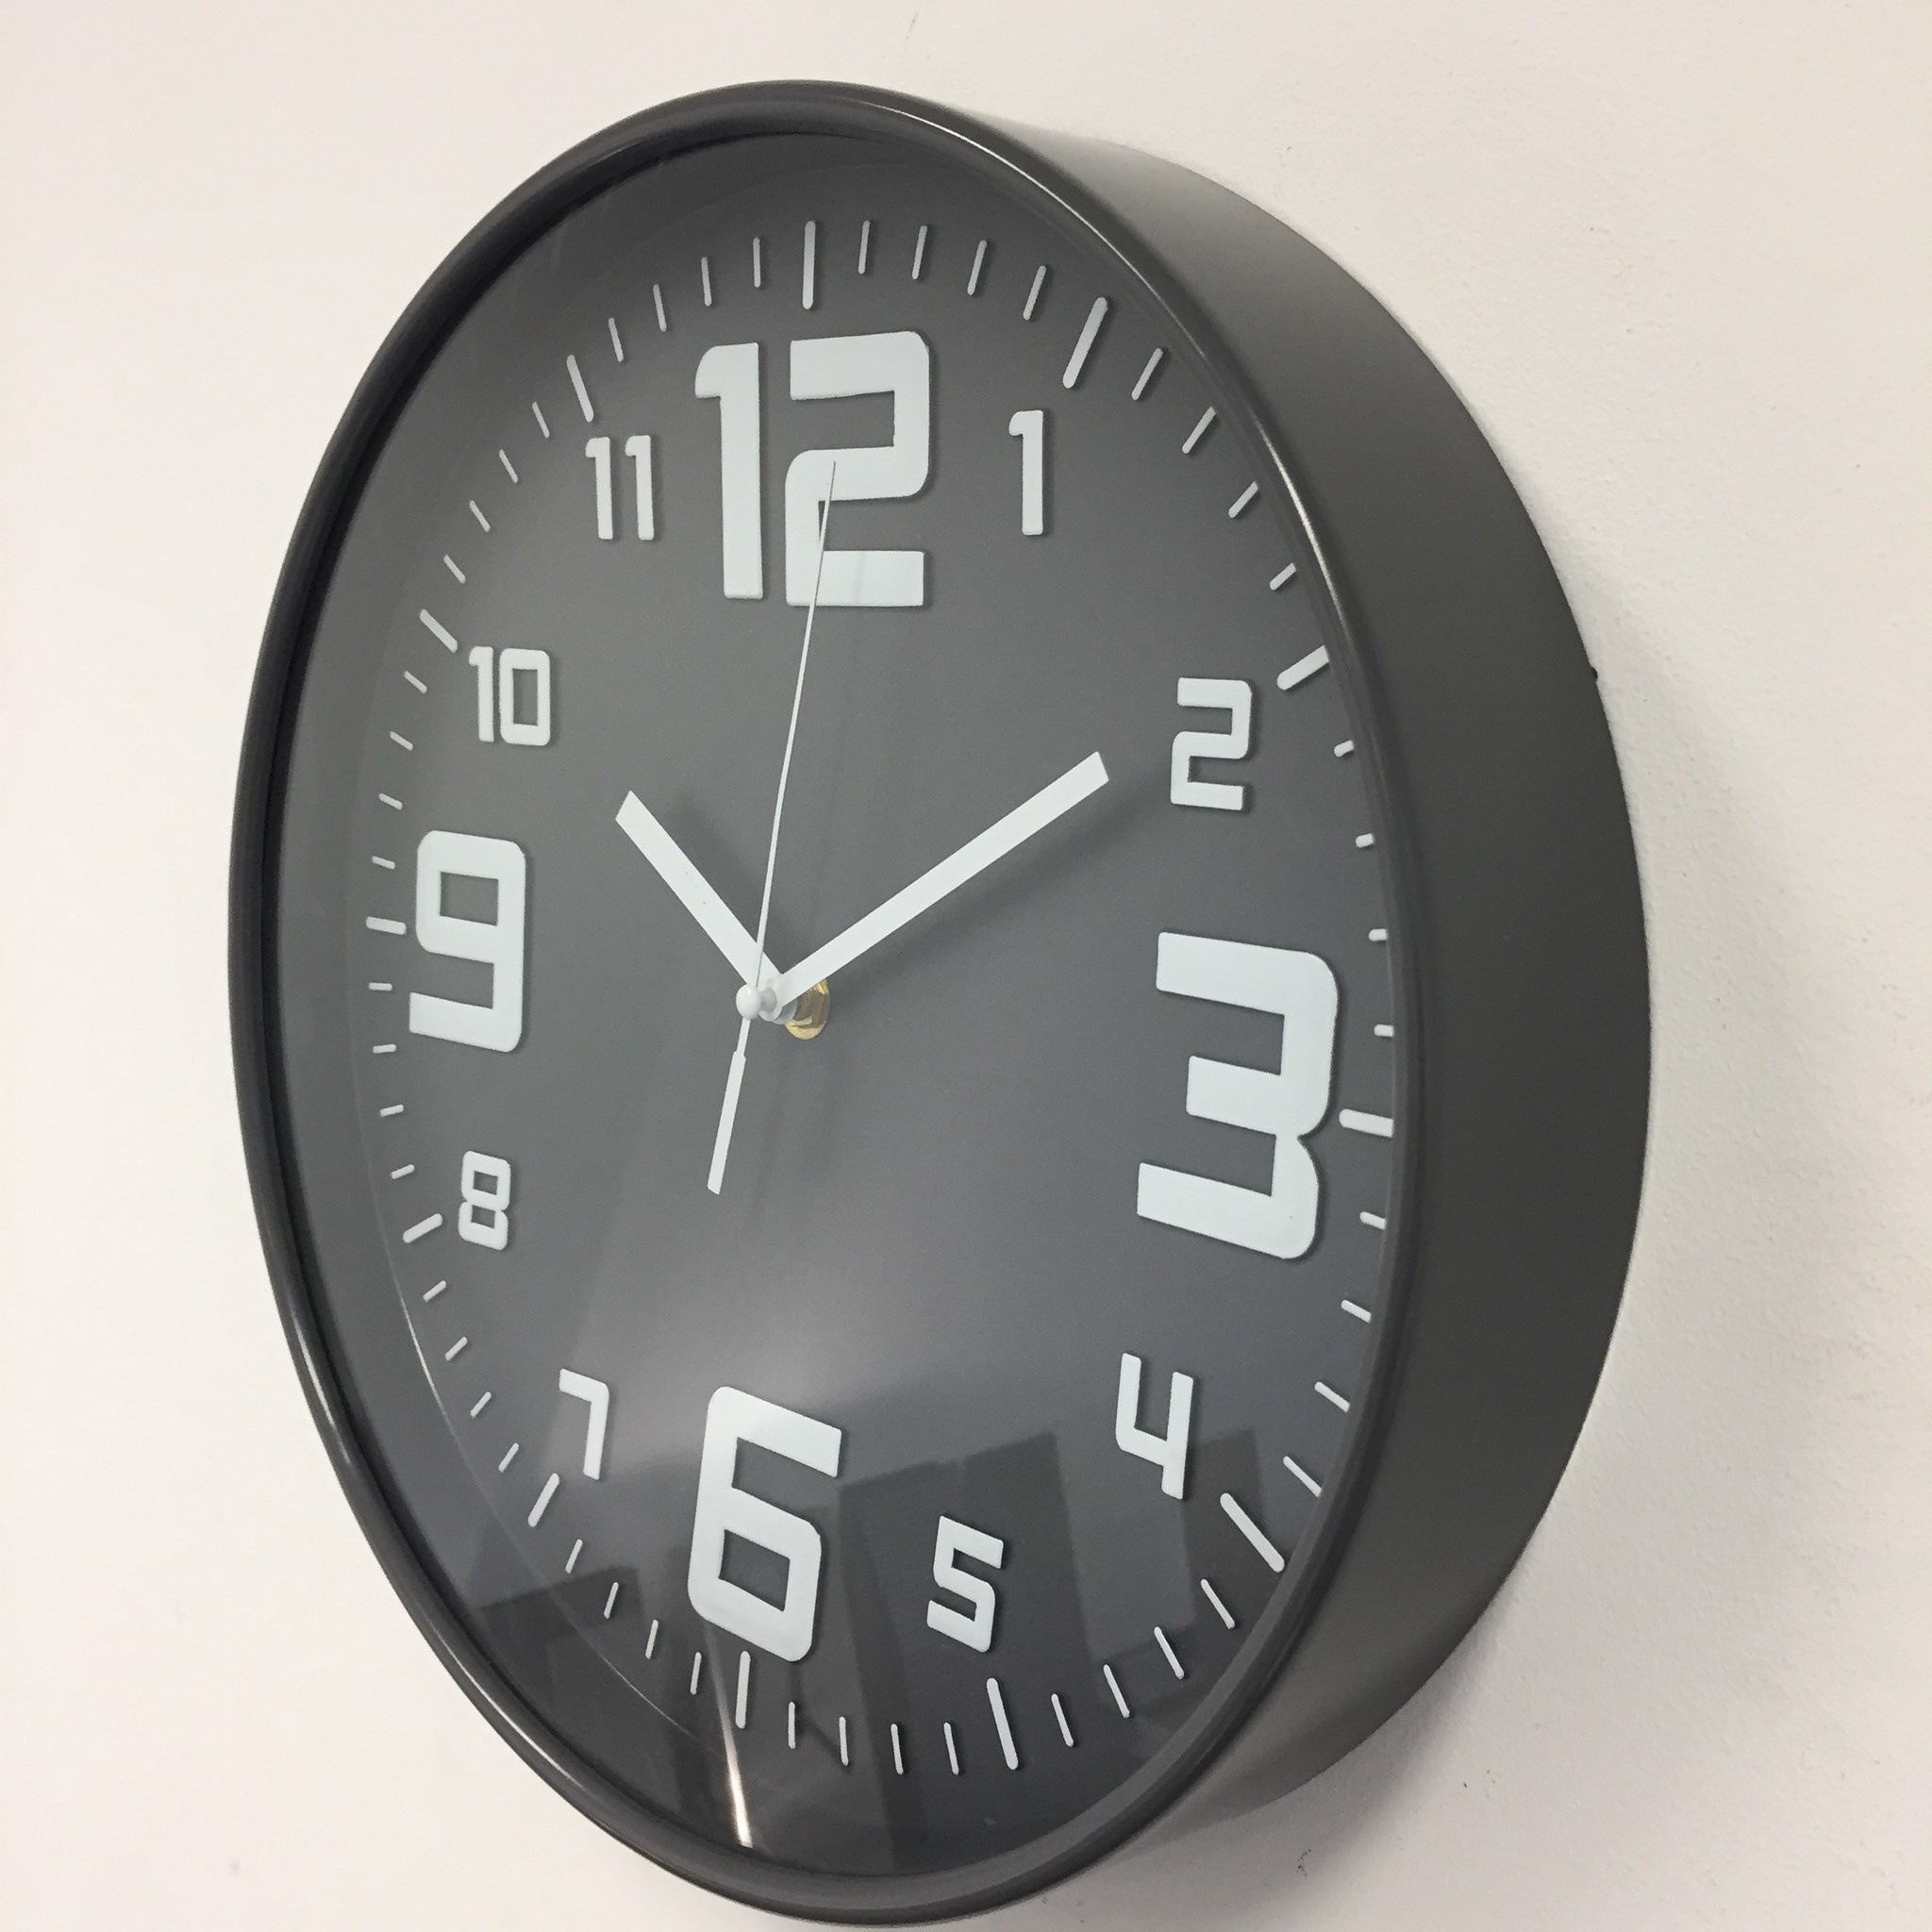 NiceTime Design - wall clock dark gray modern design